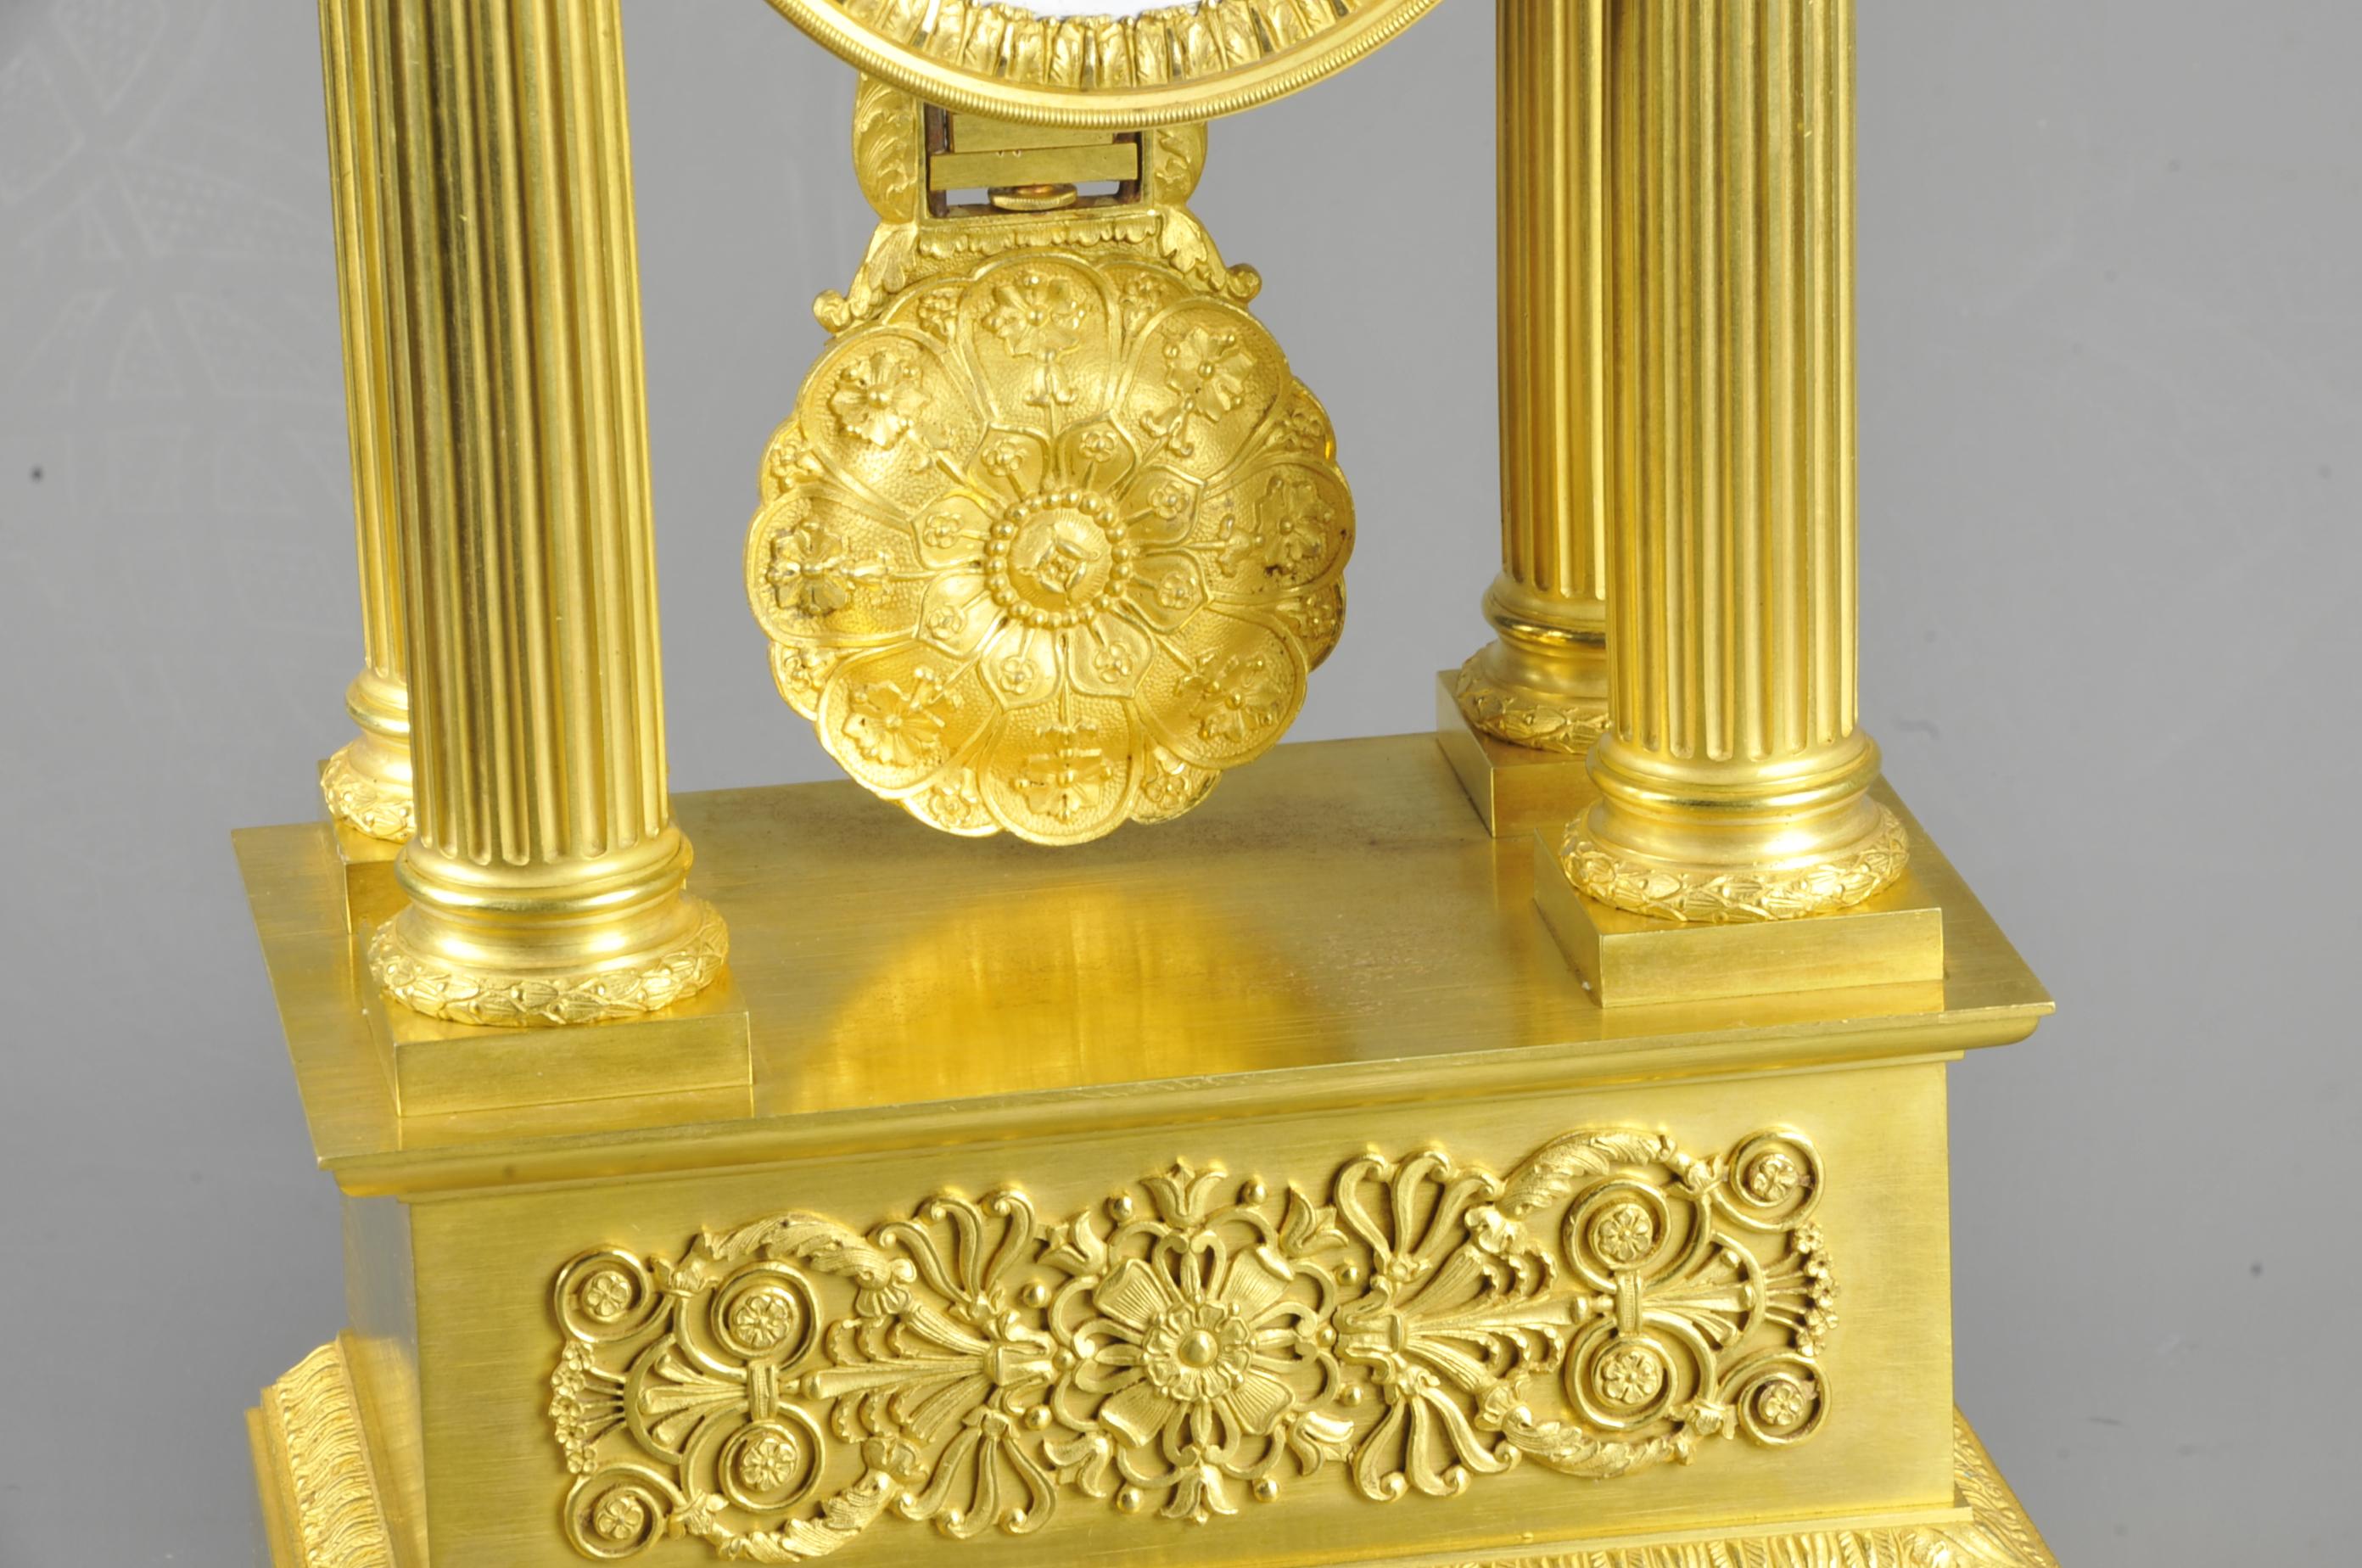 French Empire Period Portico Clock in Gilt Bronze Signed Verdière in Paris